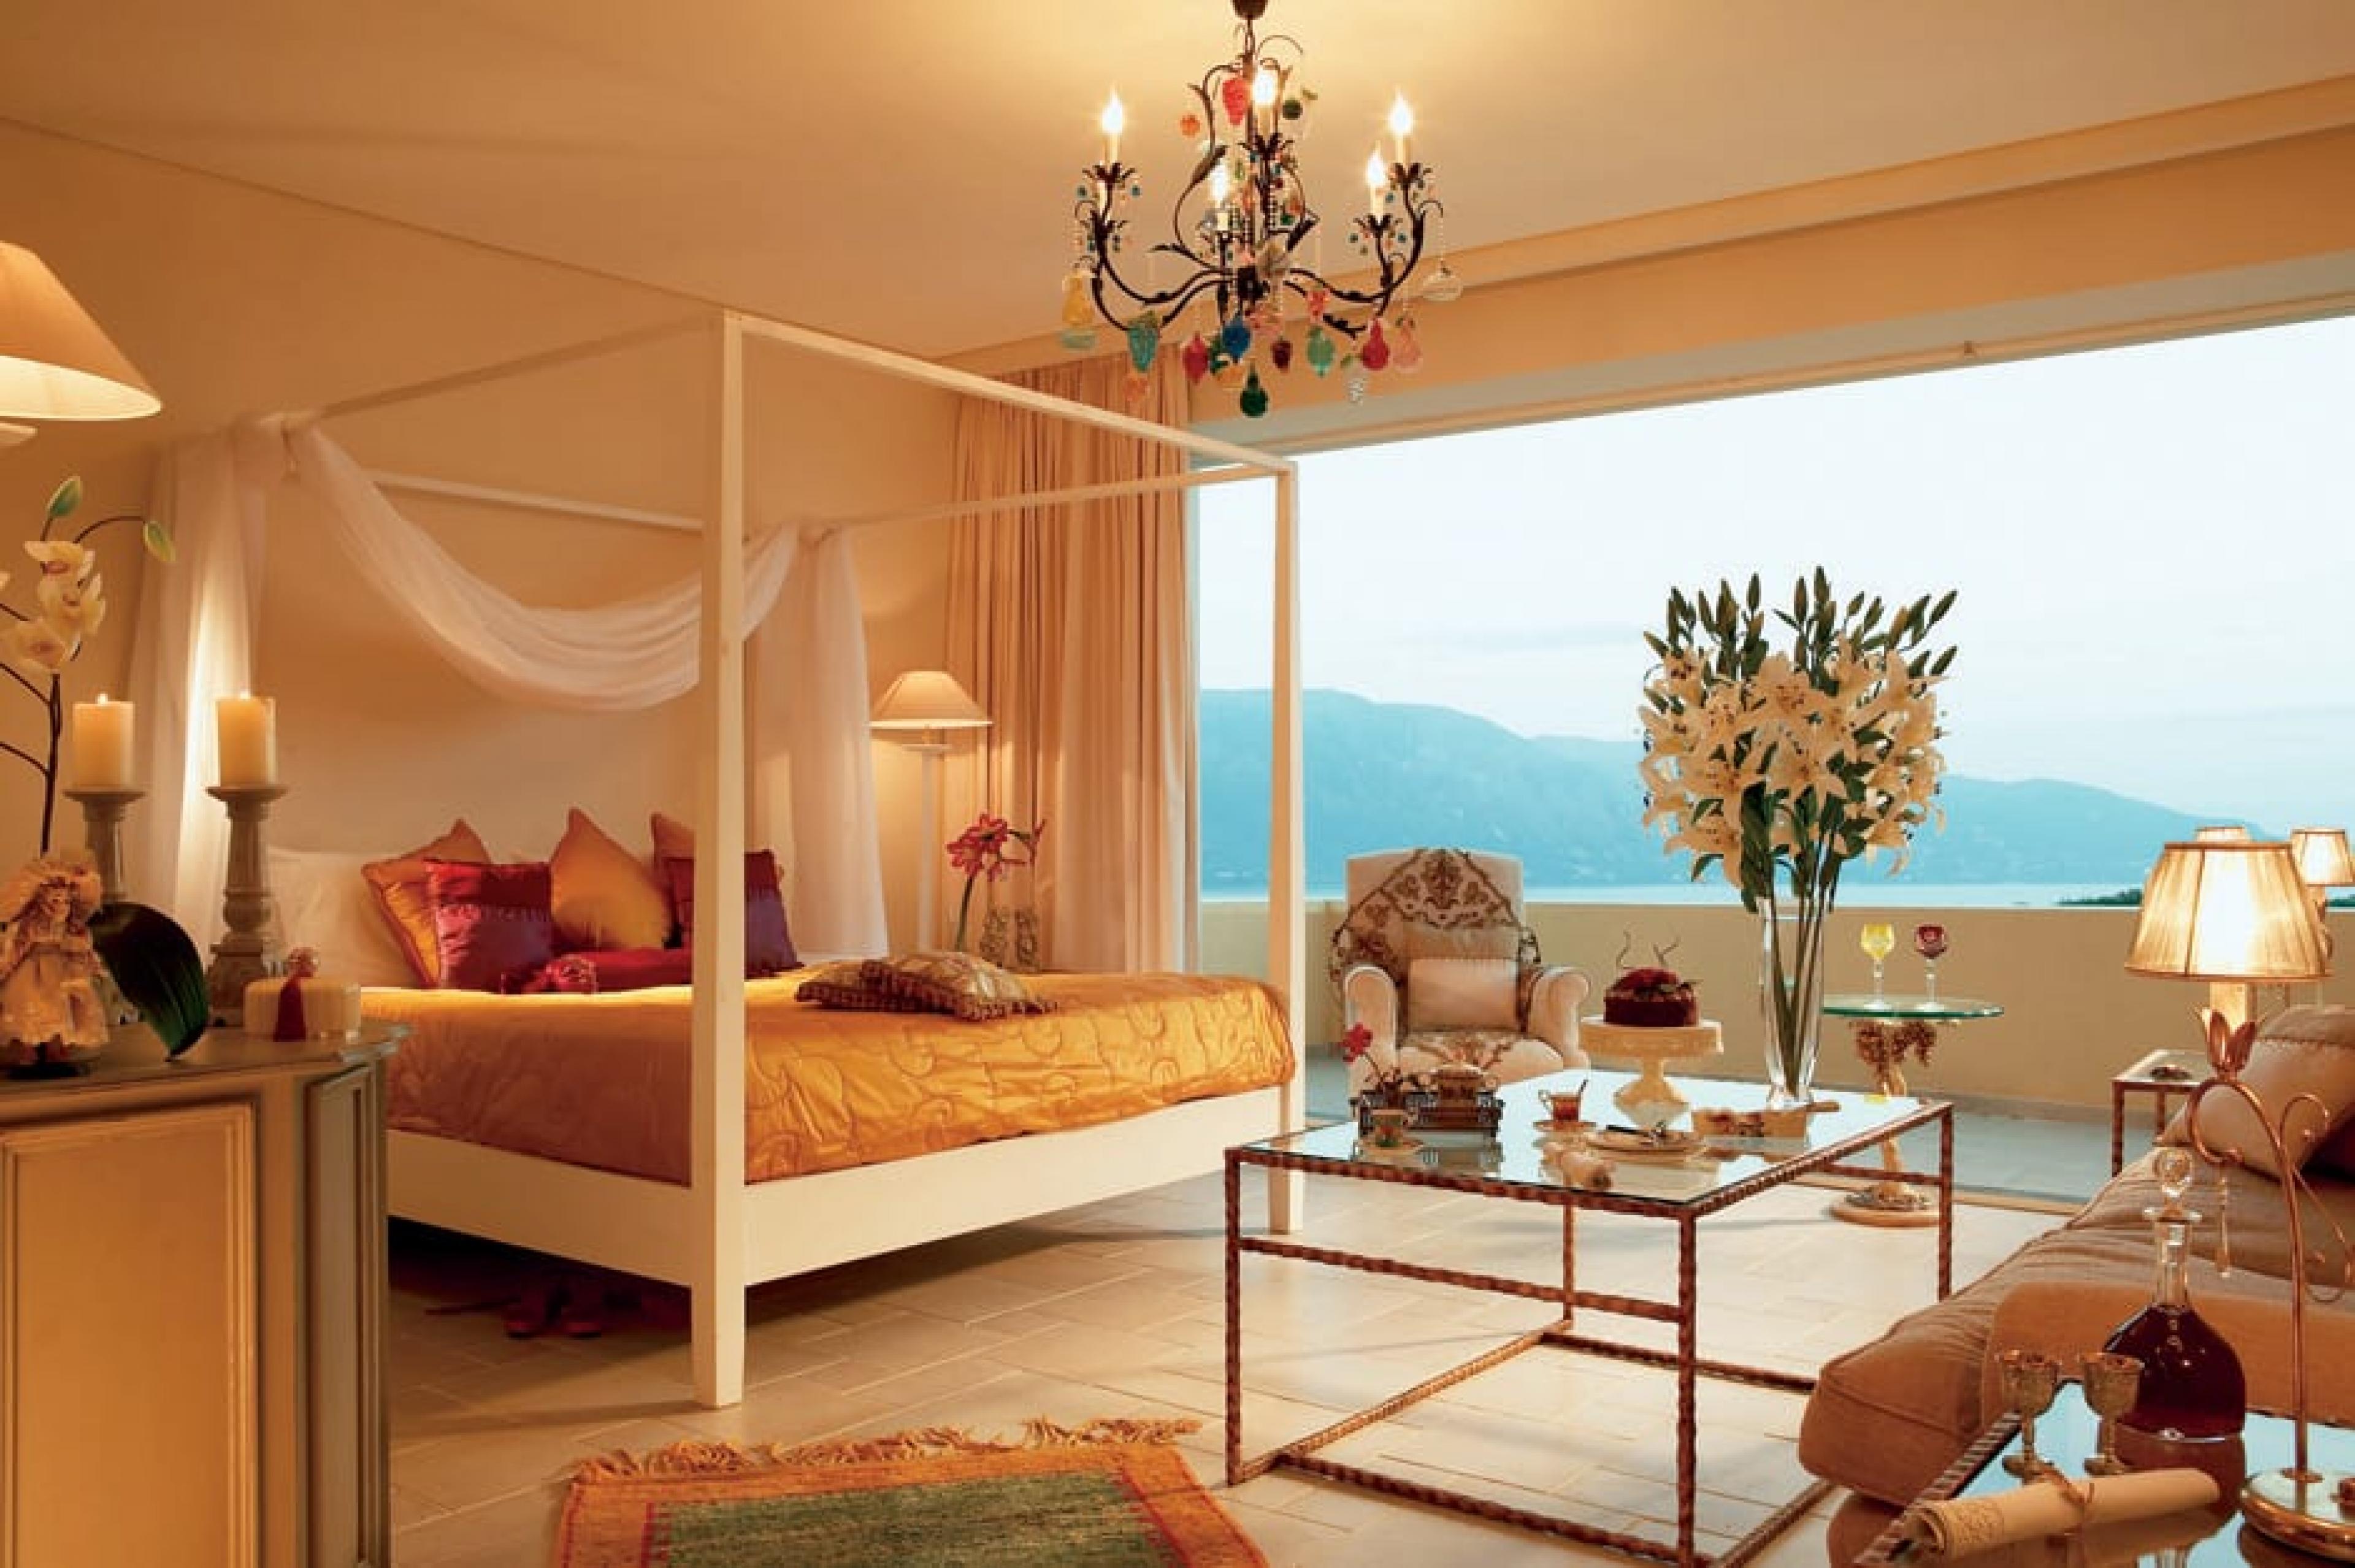 Bedroom at Eva Palace, Corfu, Greece